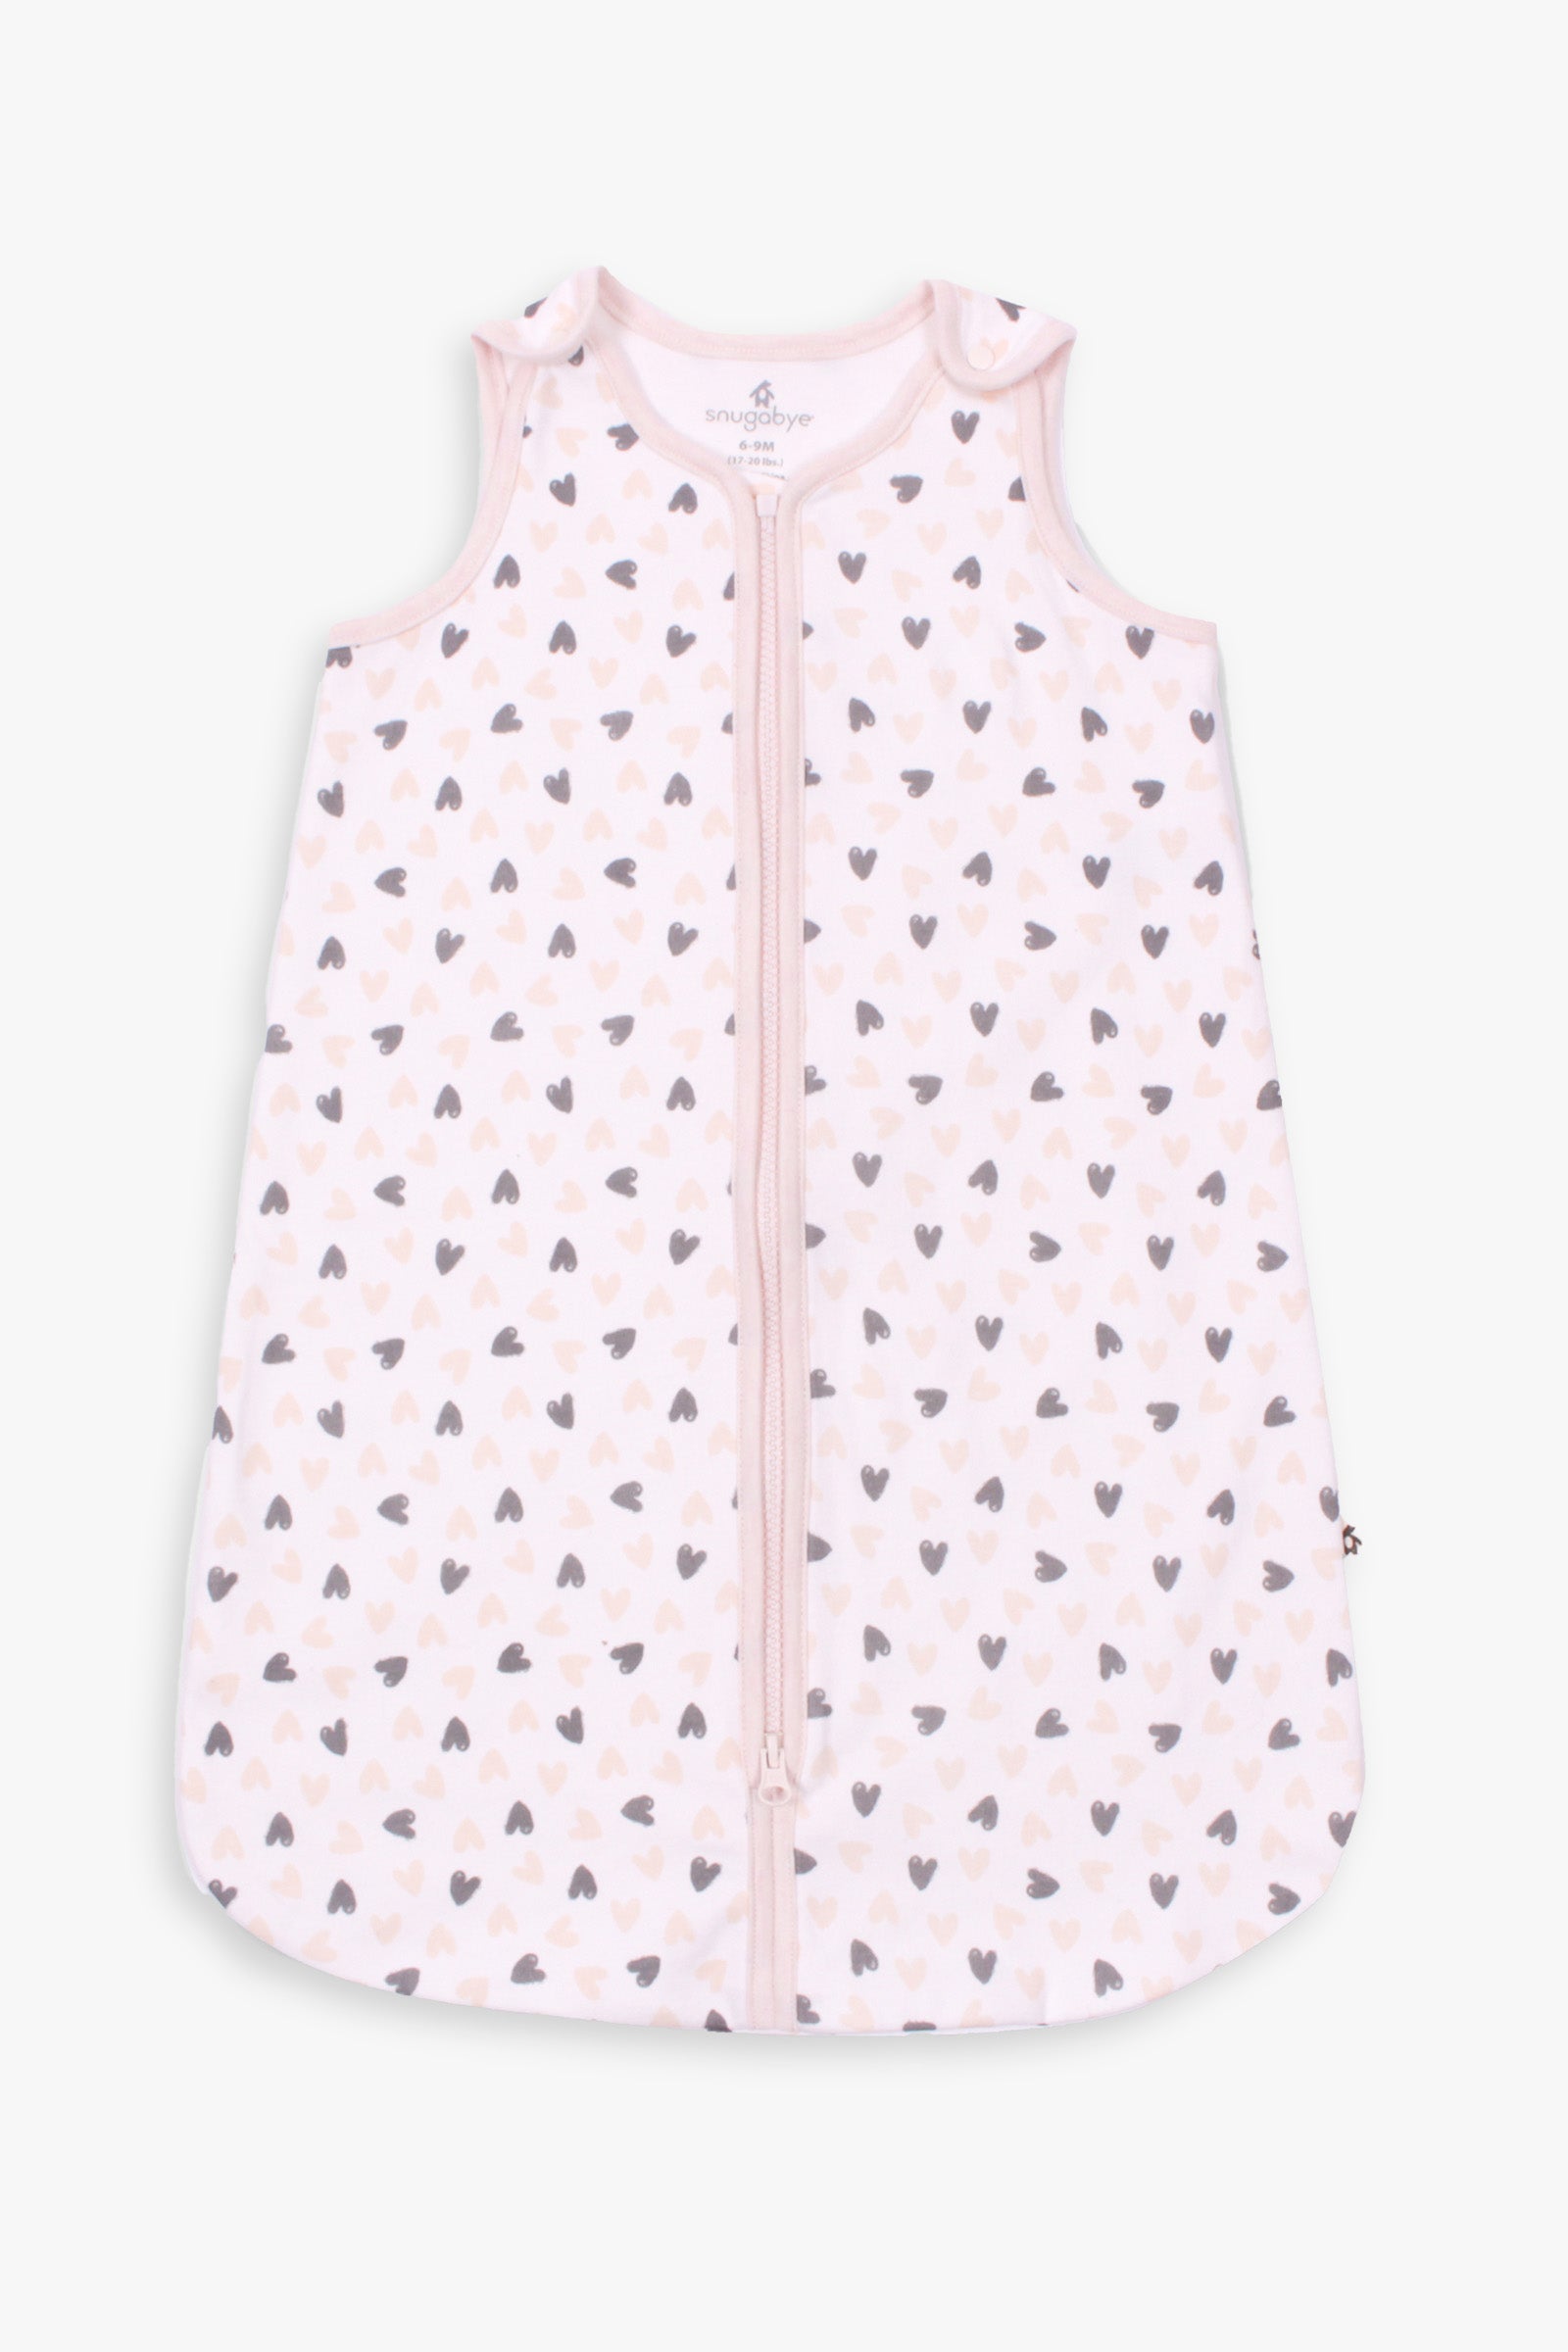 Snugabye Baby Dream Wearable Blanket Sleep Bag With Zipper